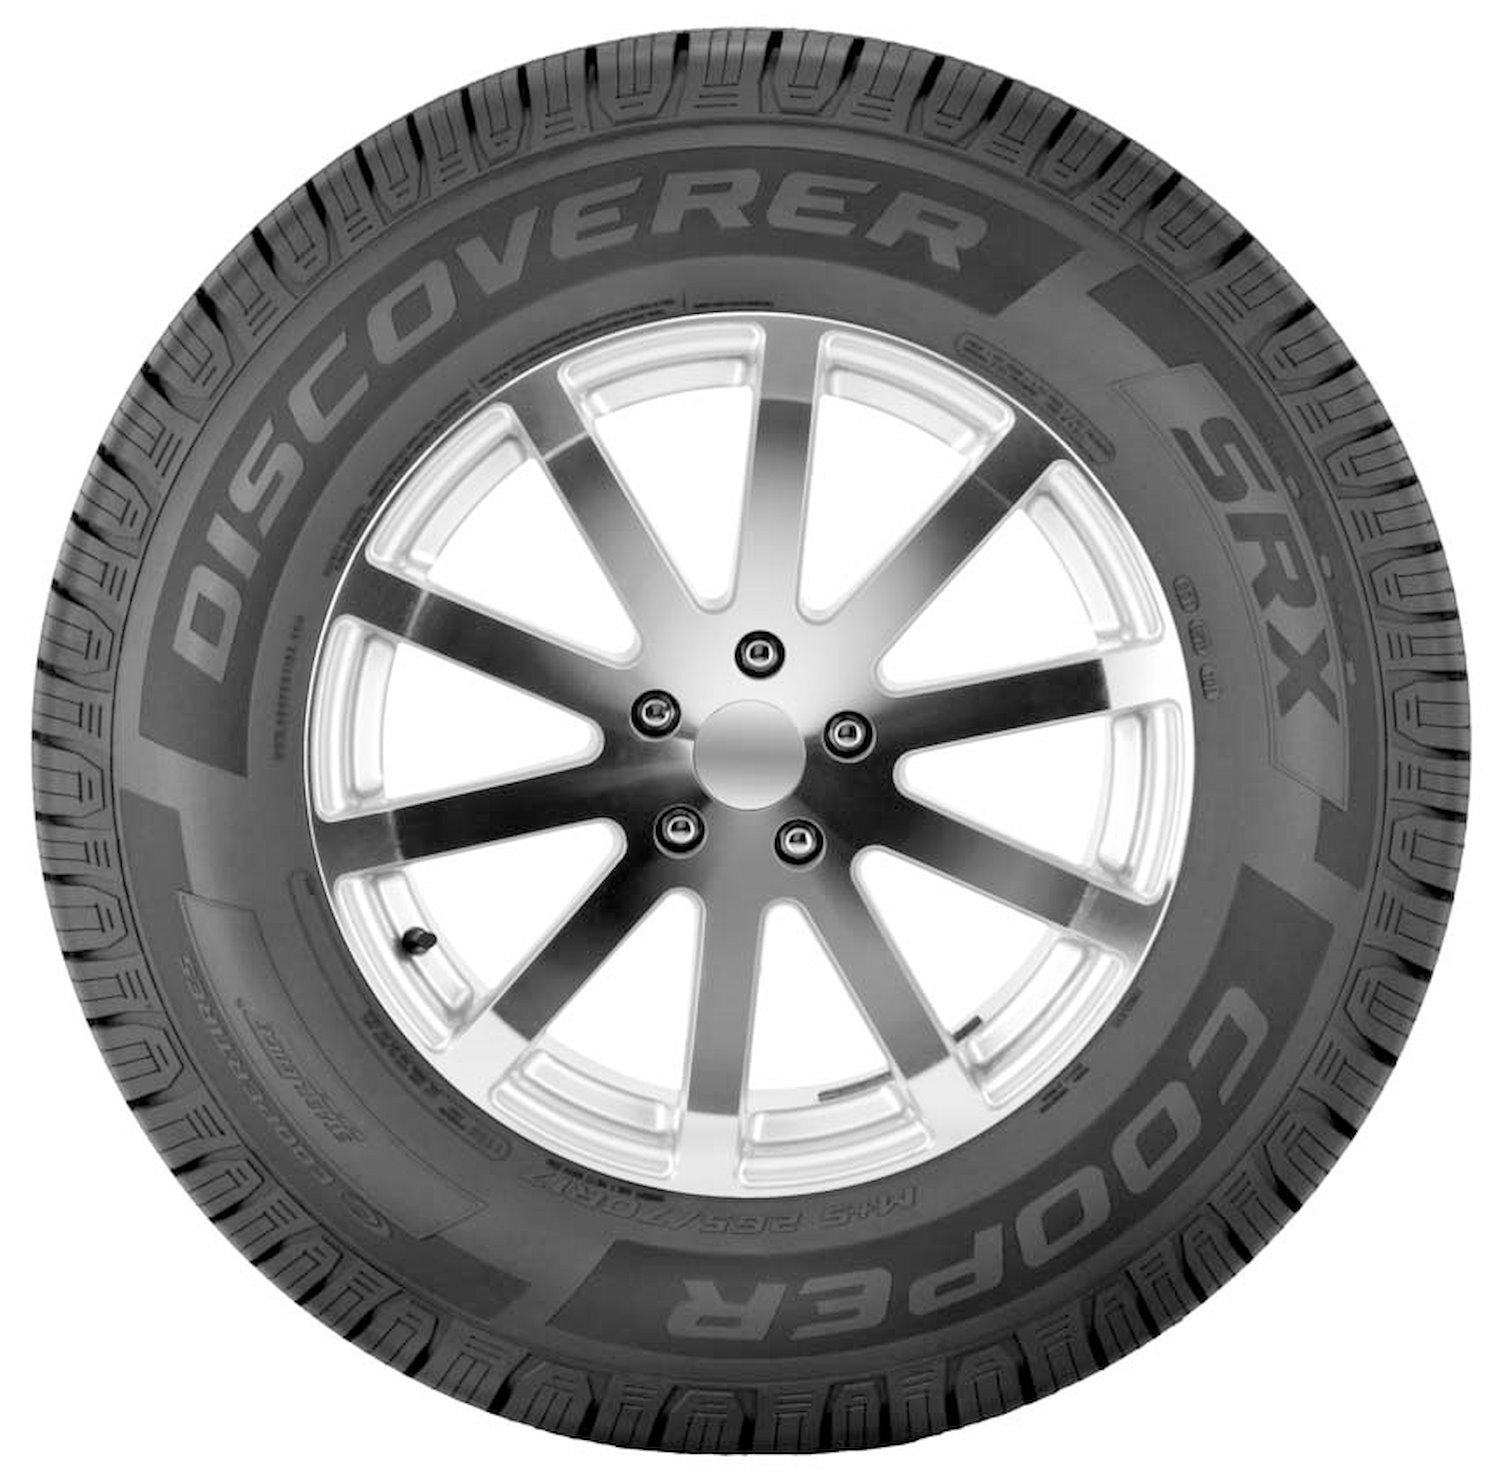 Discoverer SRX Commuter/Touring Tire, 275/60R20